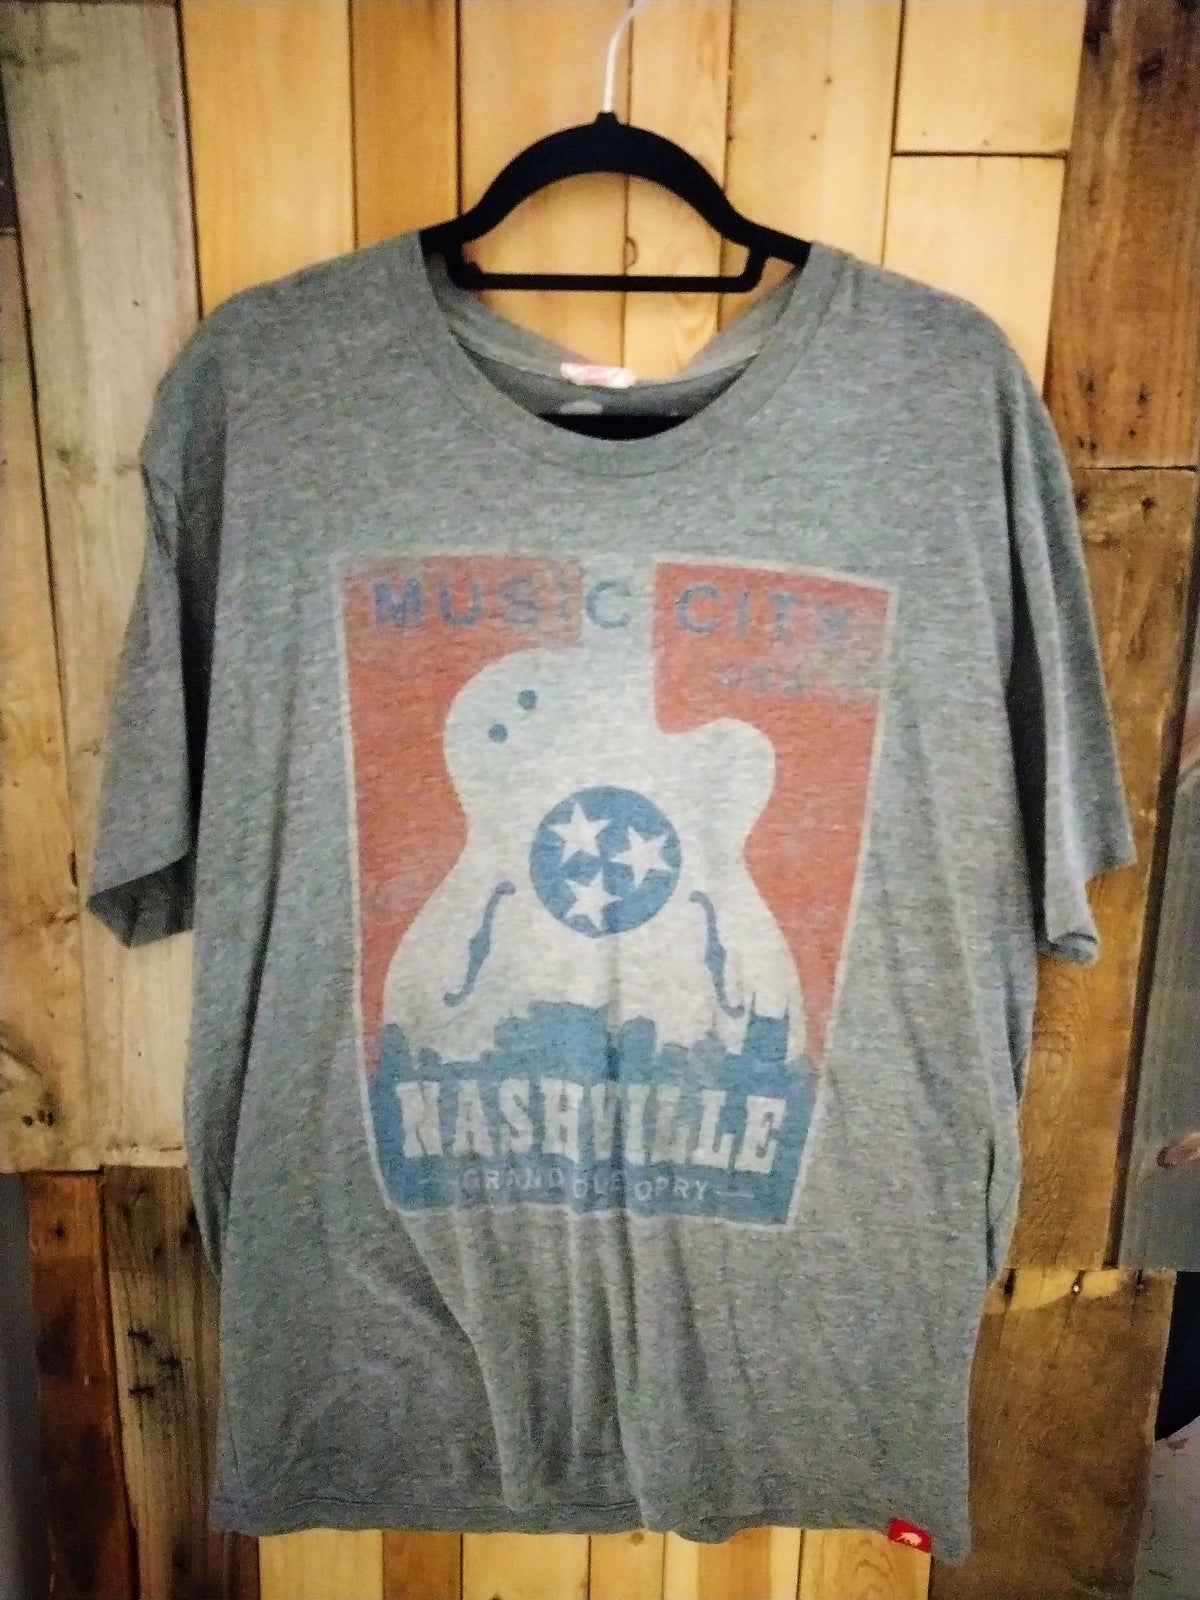 Grand Ole Opry "Music City USA" Official Merch T Shirt Size XL